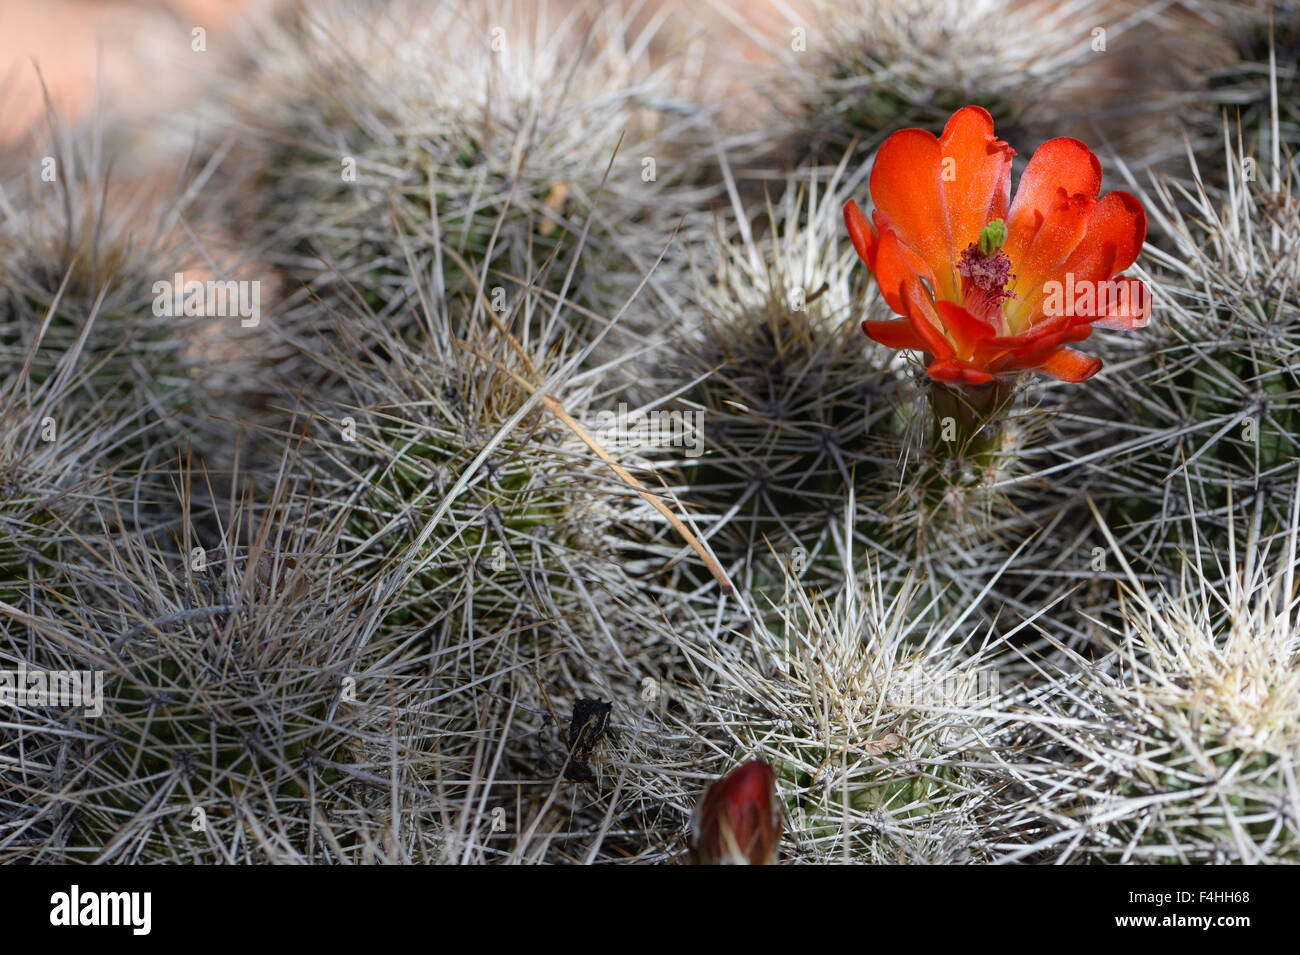 Red cactus flower Stock Photo